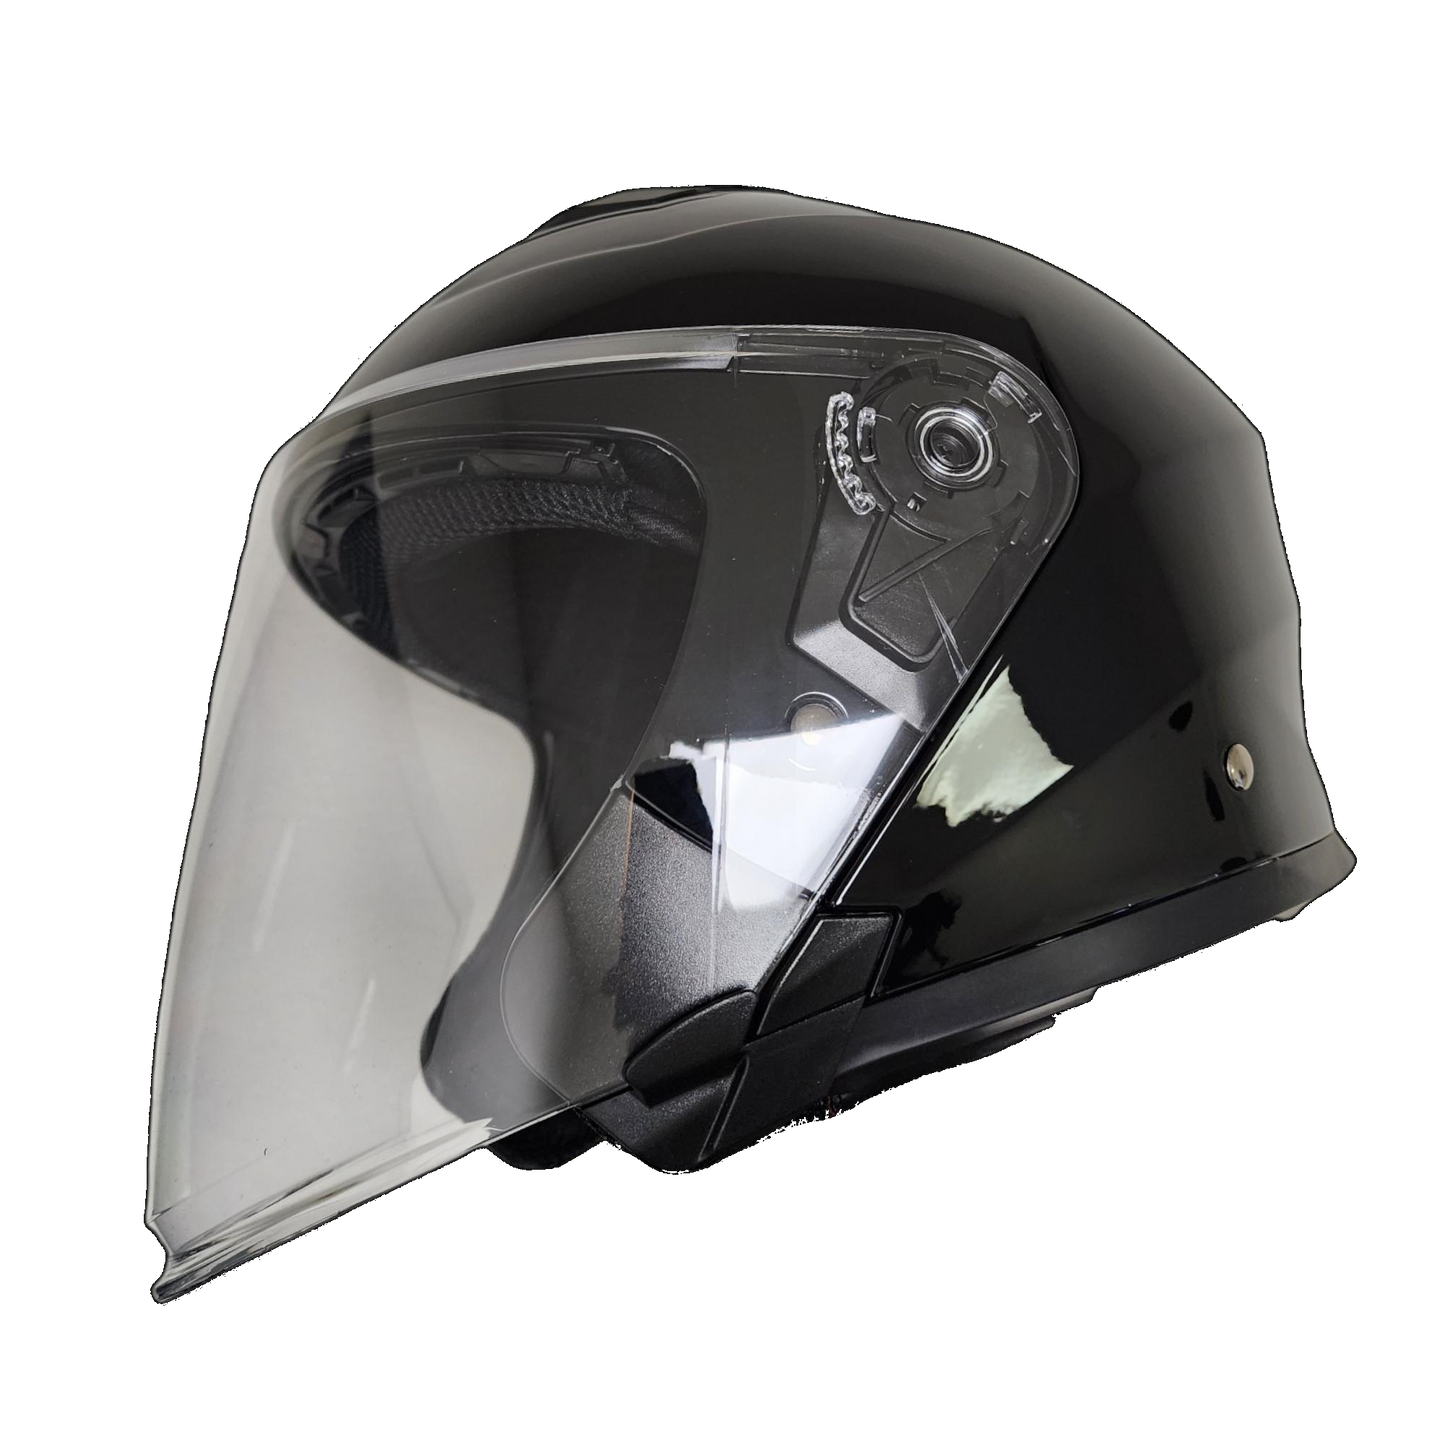 The Largest Open Face Helmet on the market! Vega Superdome Open Face Helmet